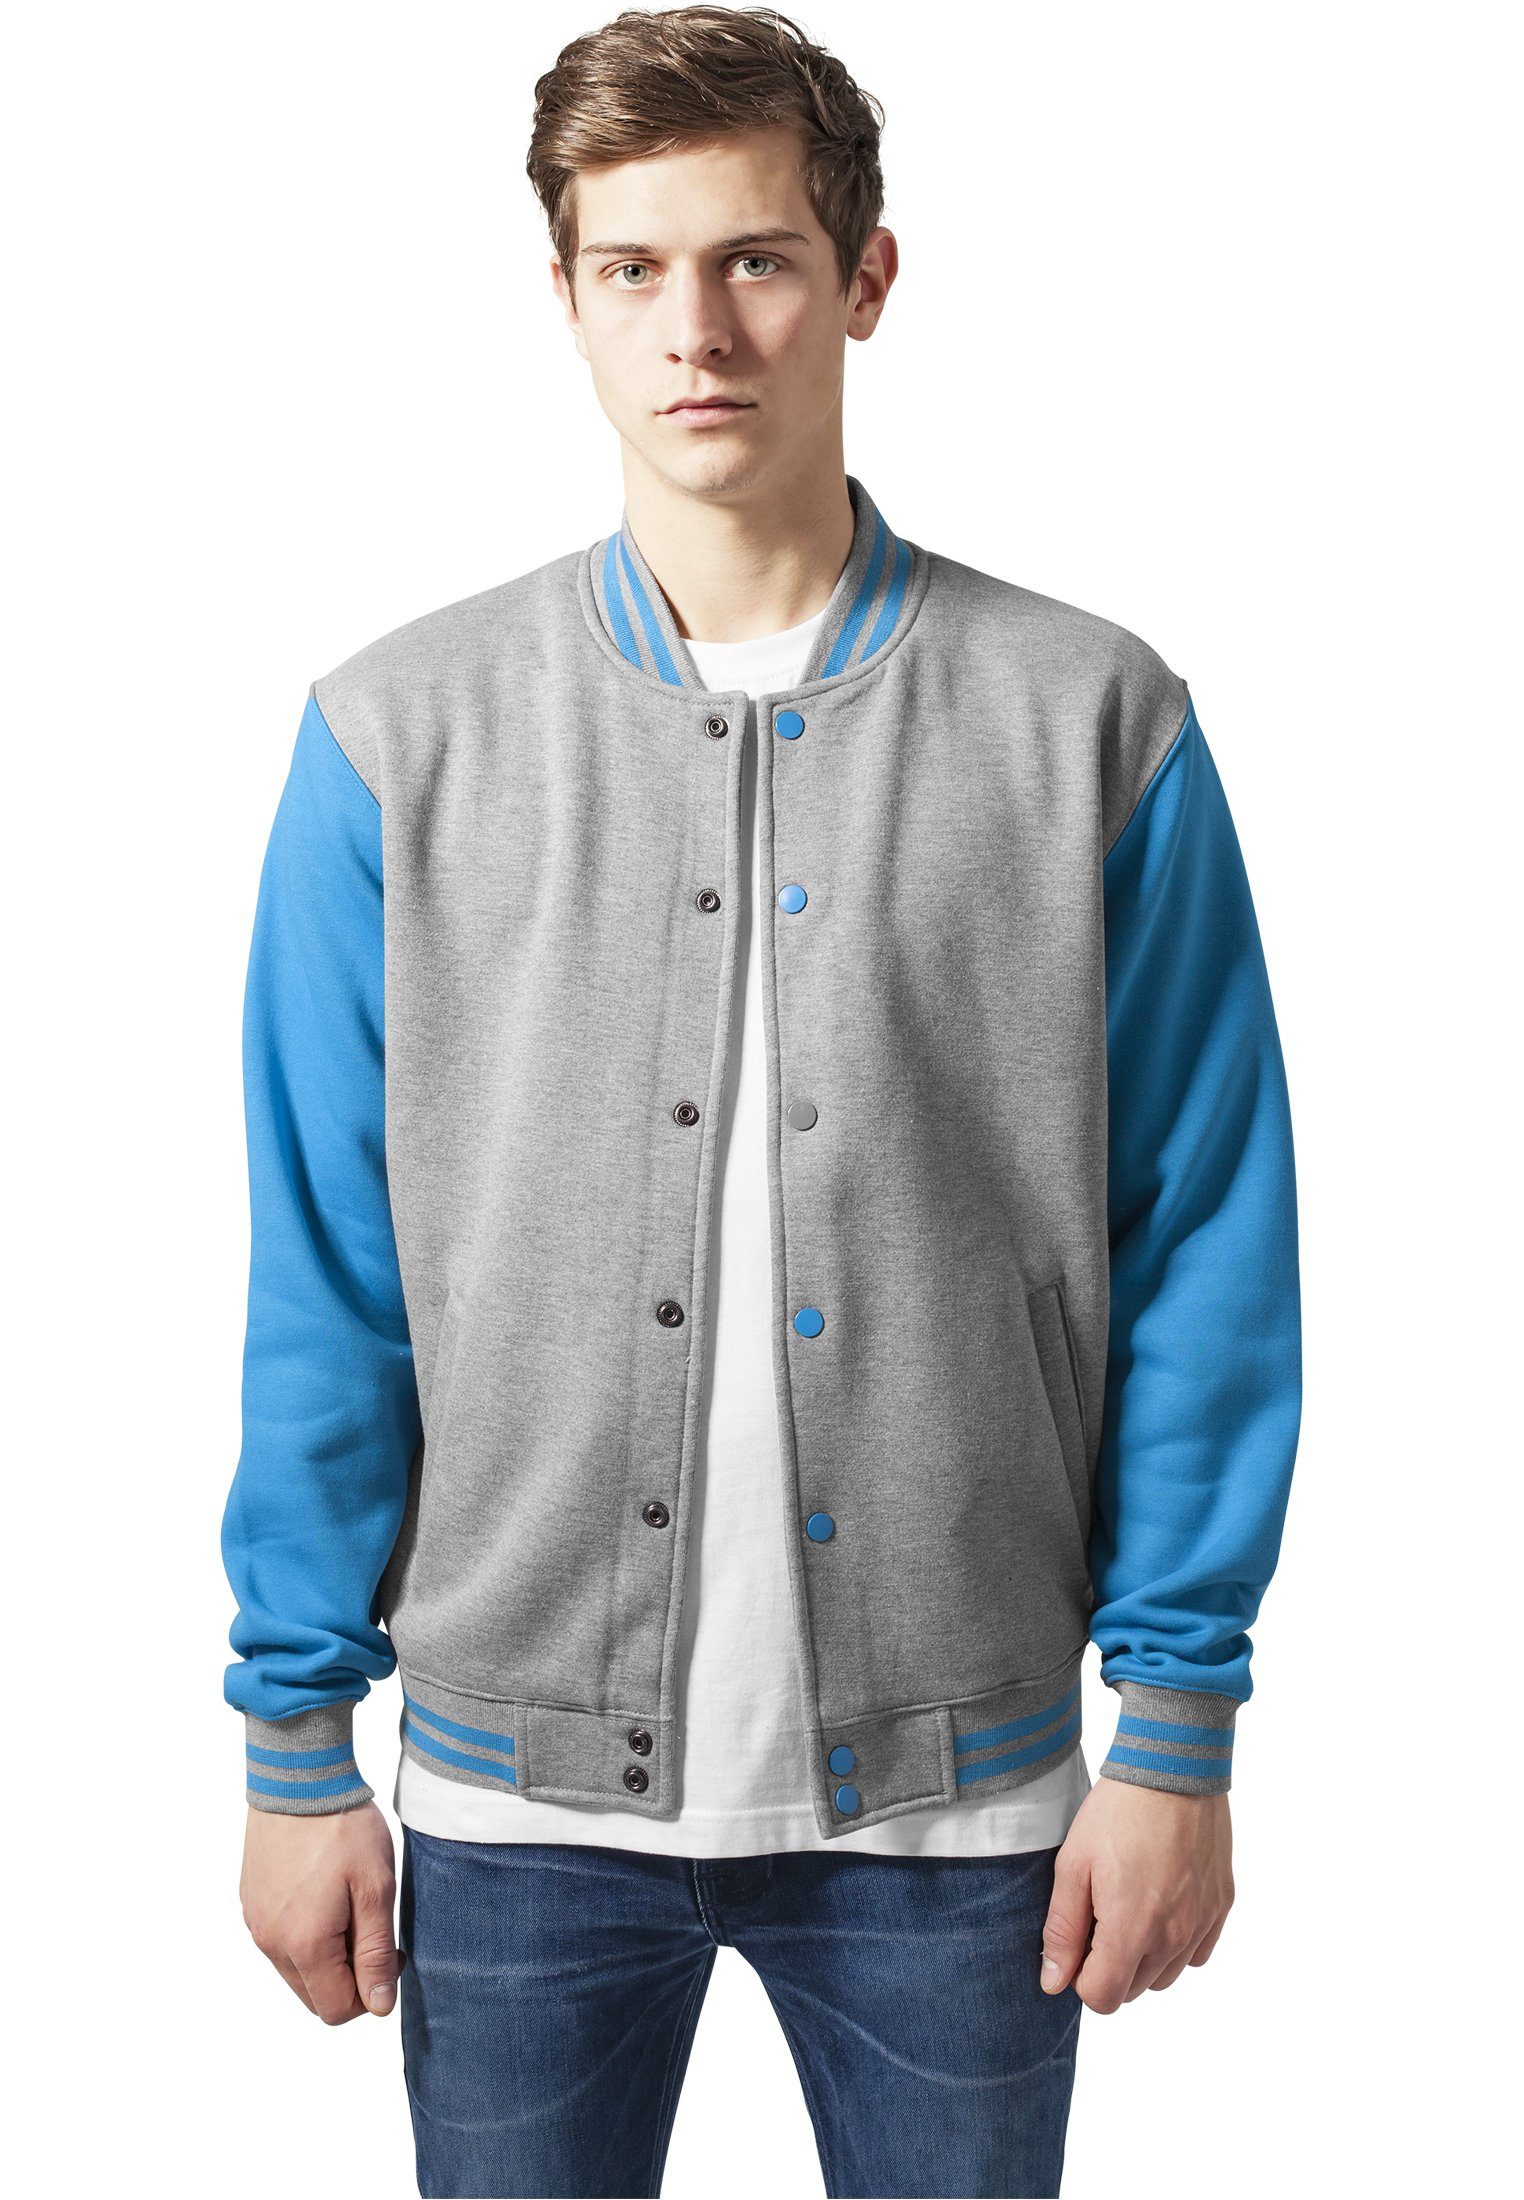 URBAN CLASSICS Outdoorjacke Herren 2-tone College Sweatjacket (1-St) grey/turquise